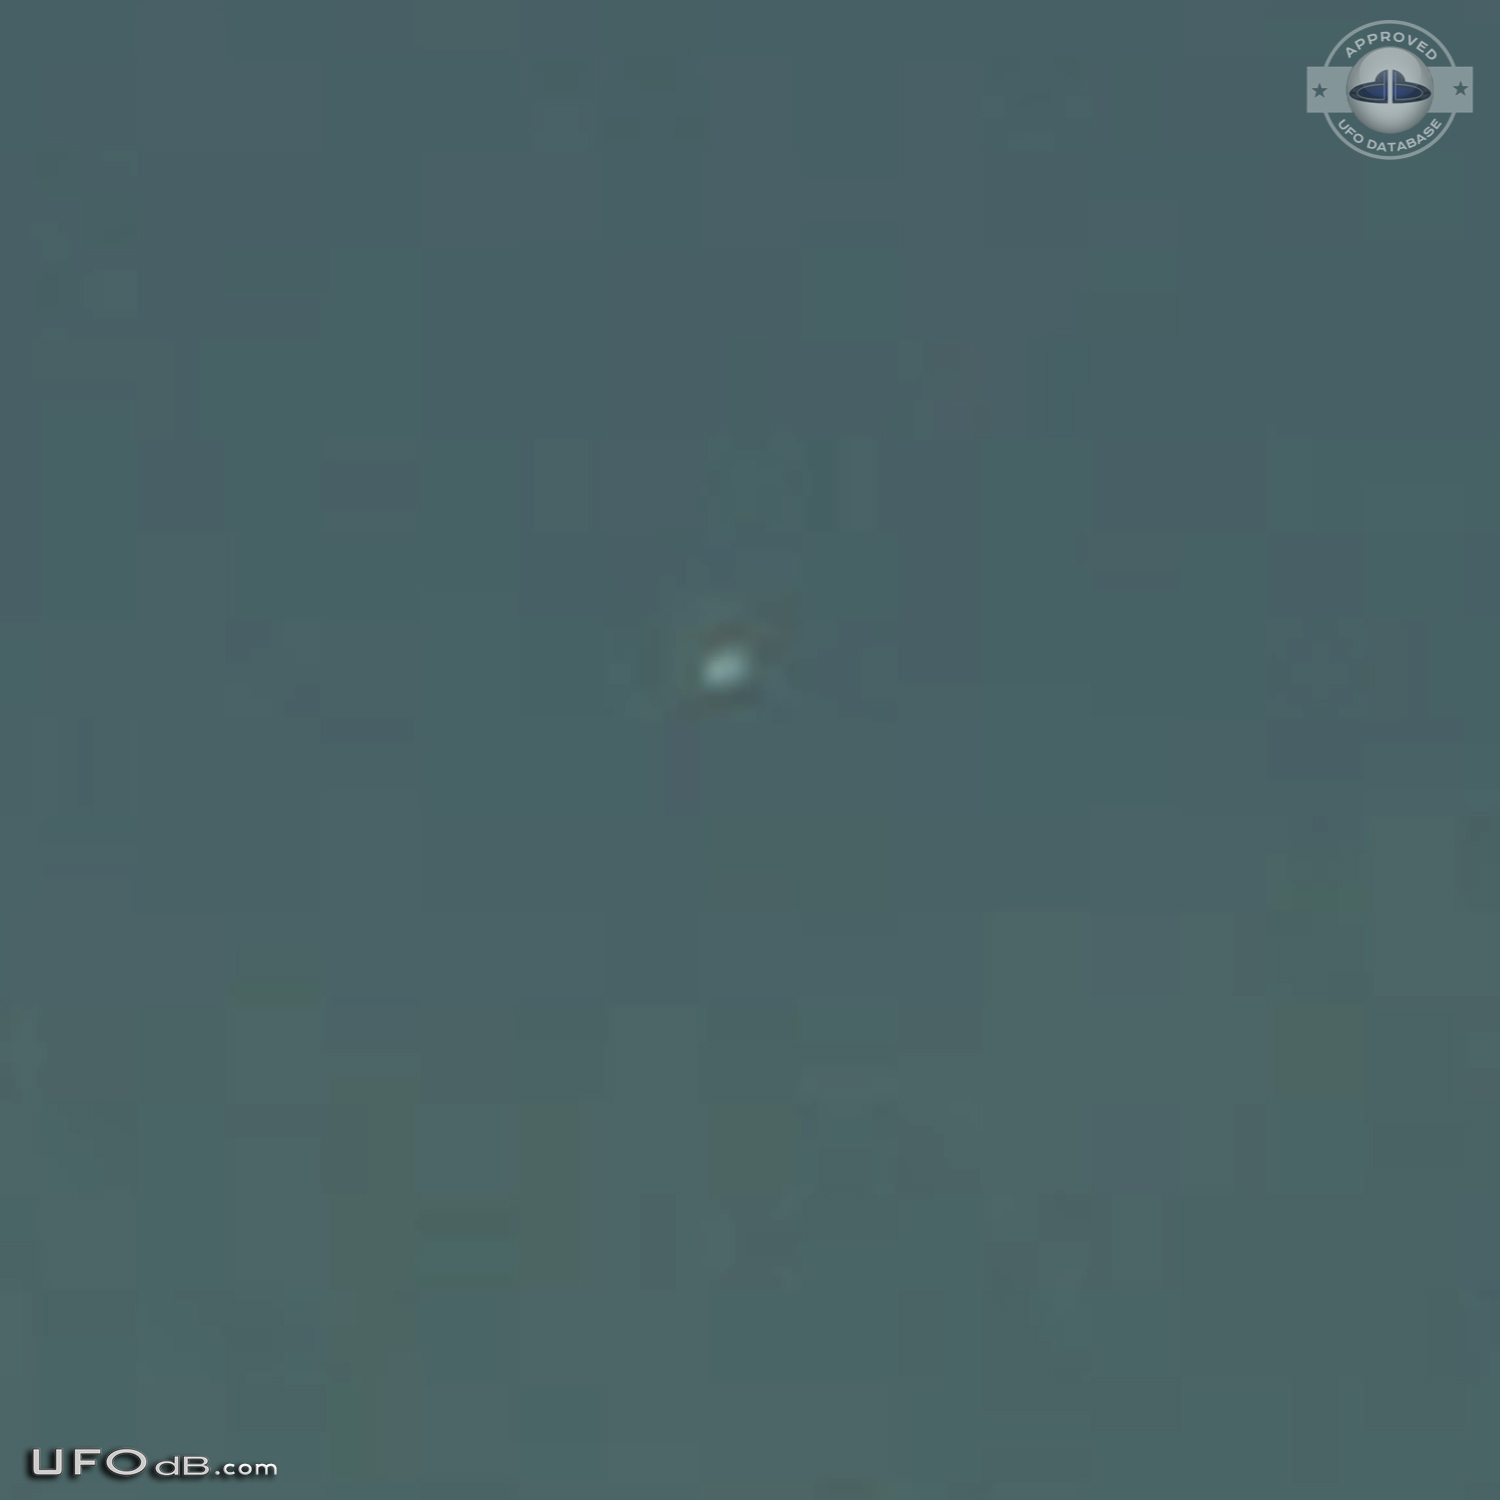 Sea picture capture UFO far away near Riau Islands Indonesia 2014 UFO Picture #636-5